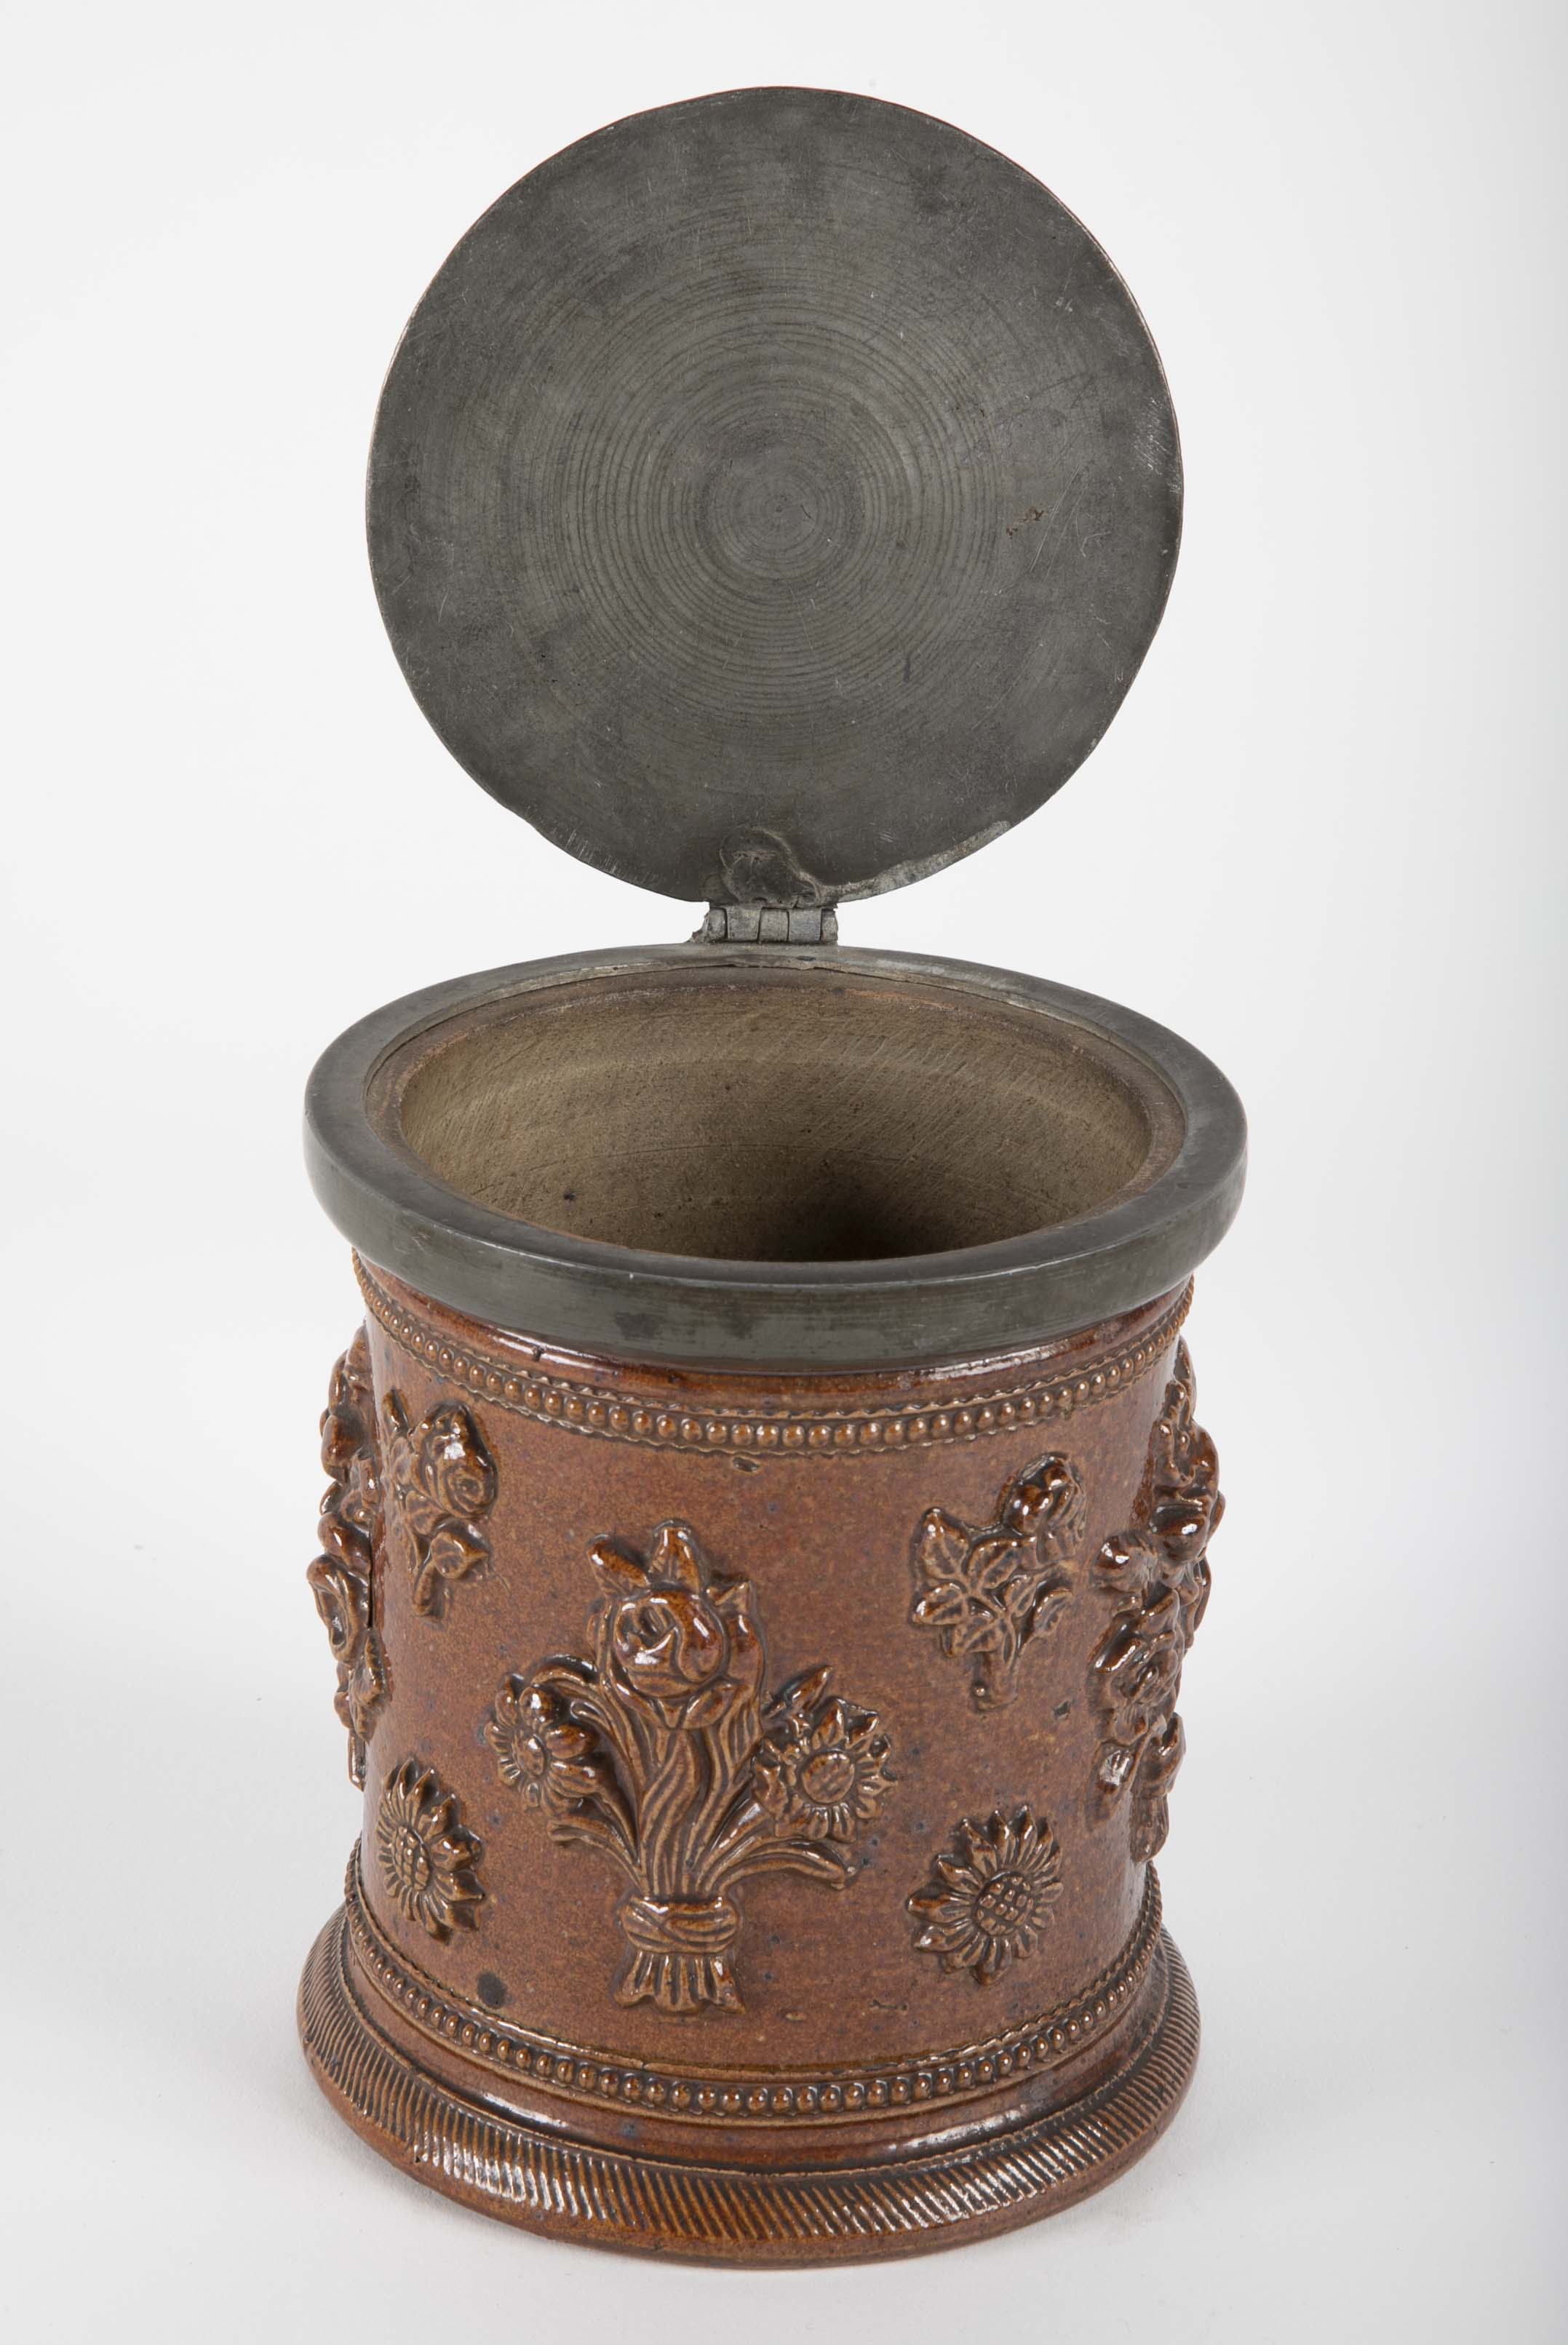 18th Century German Salt Glaze Tobacco Jar with Pewter Mounts